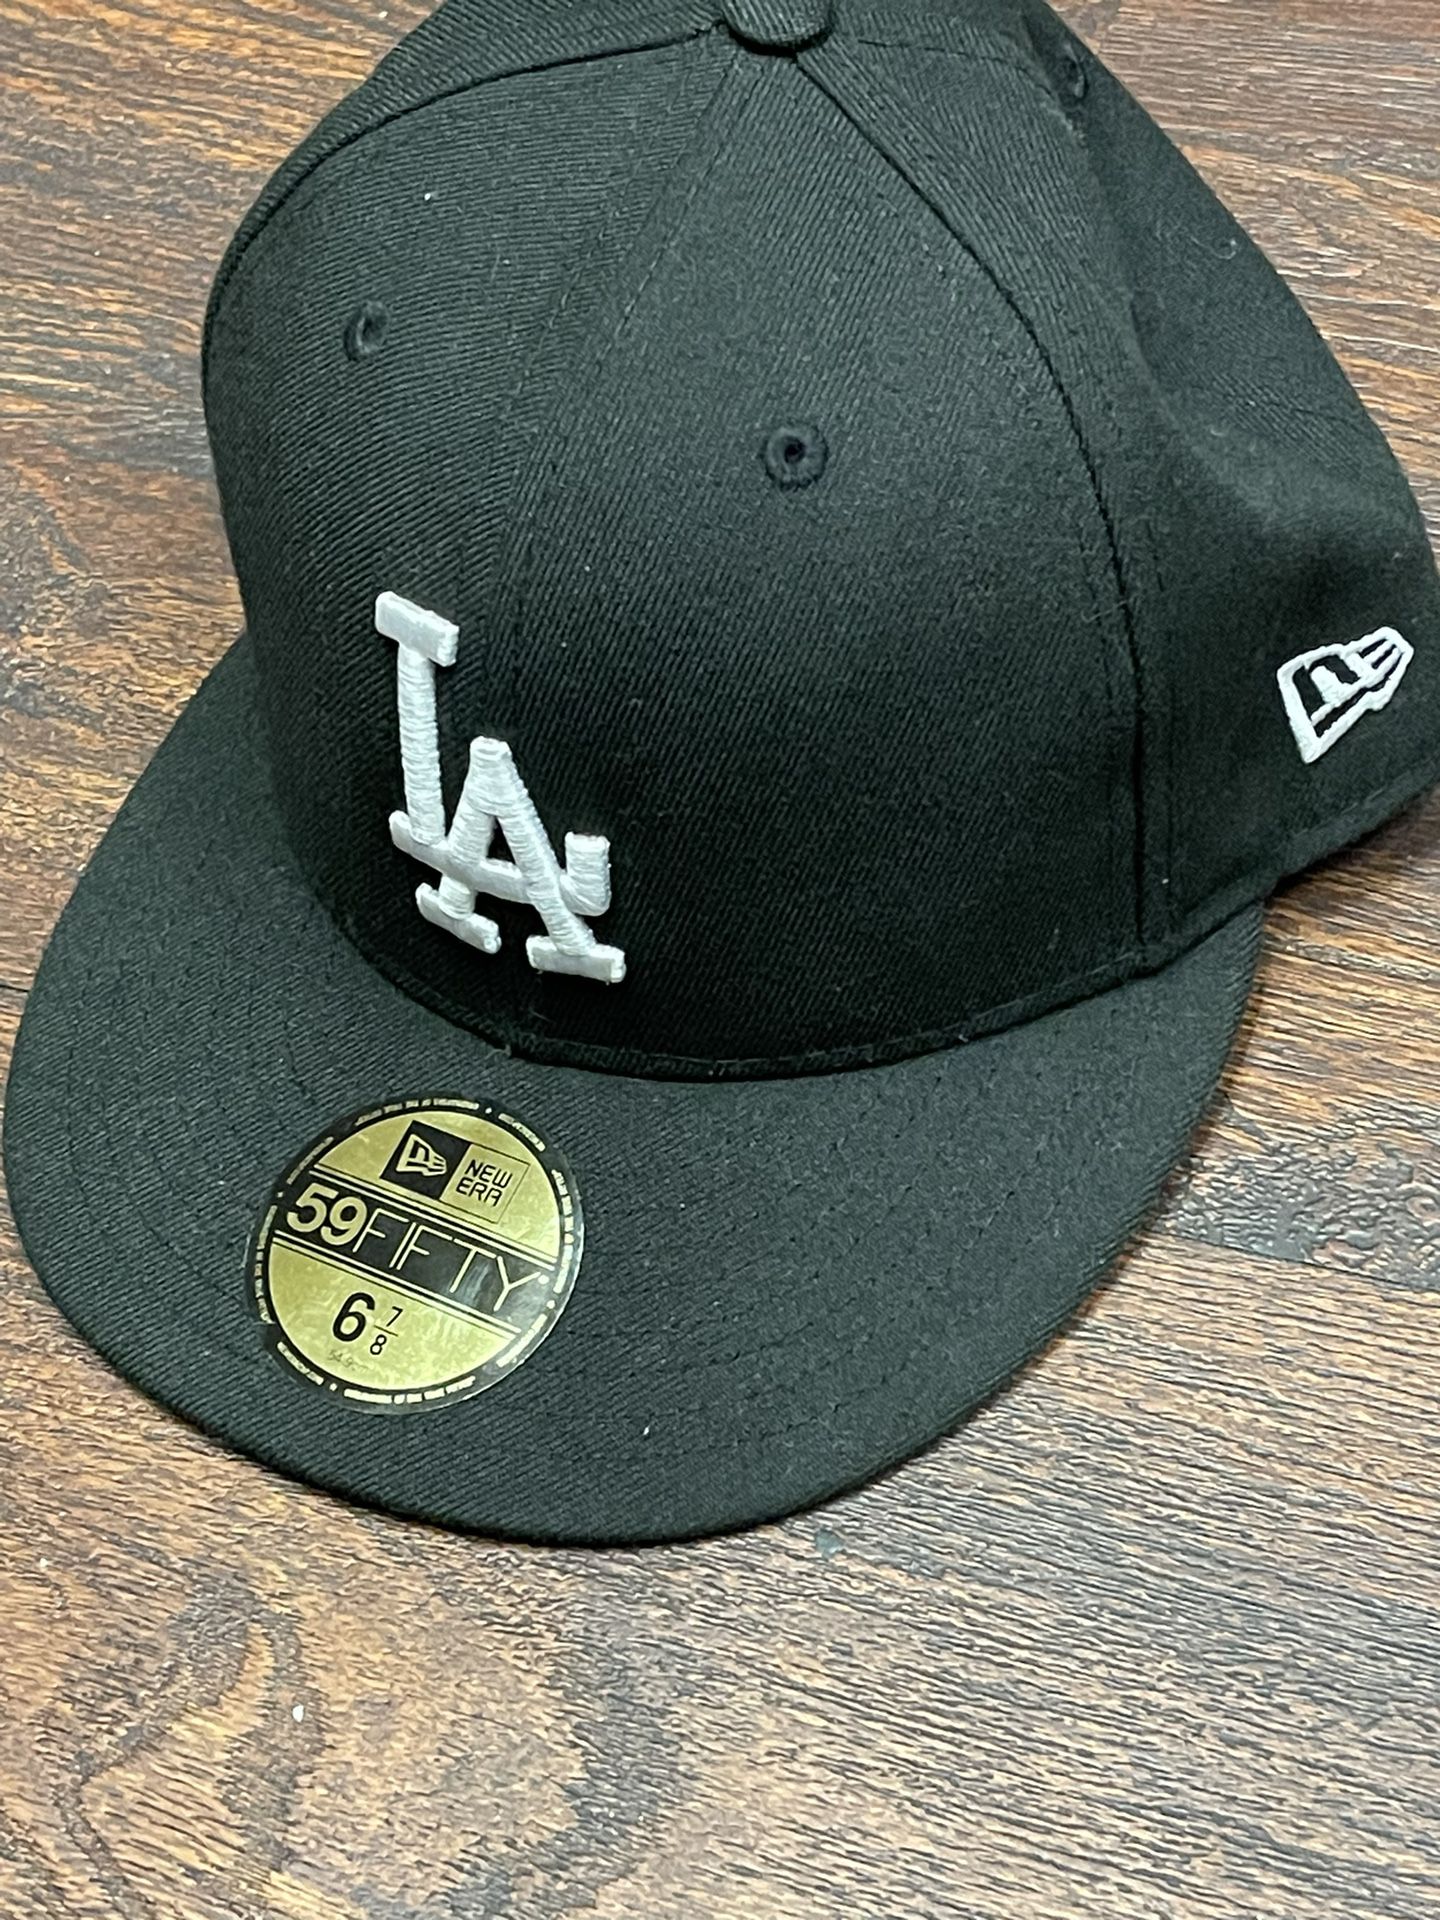 Original Black Dodgers Hat Size 6 7/8